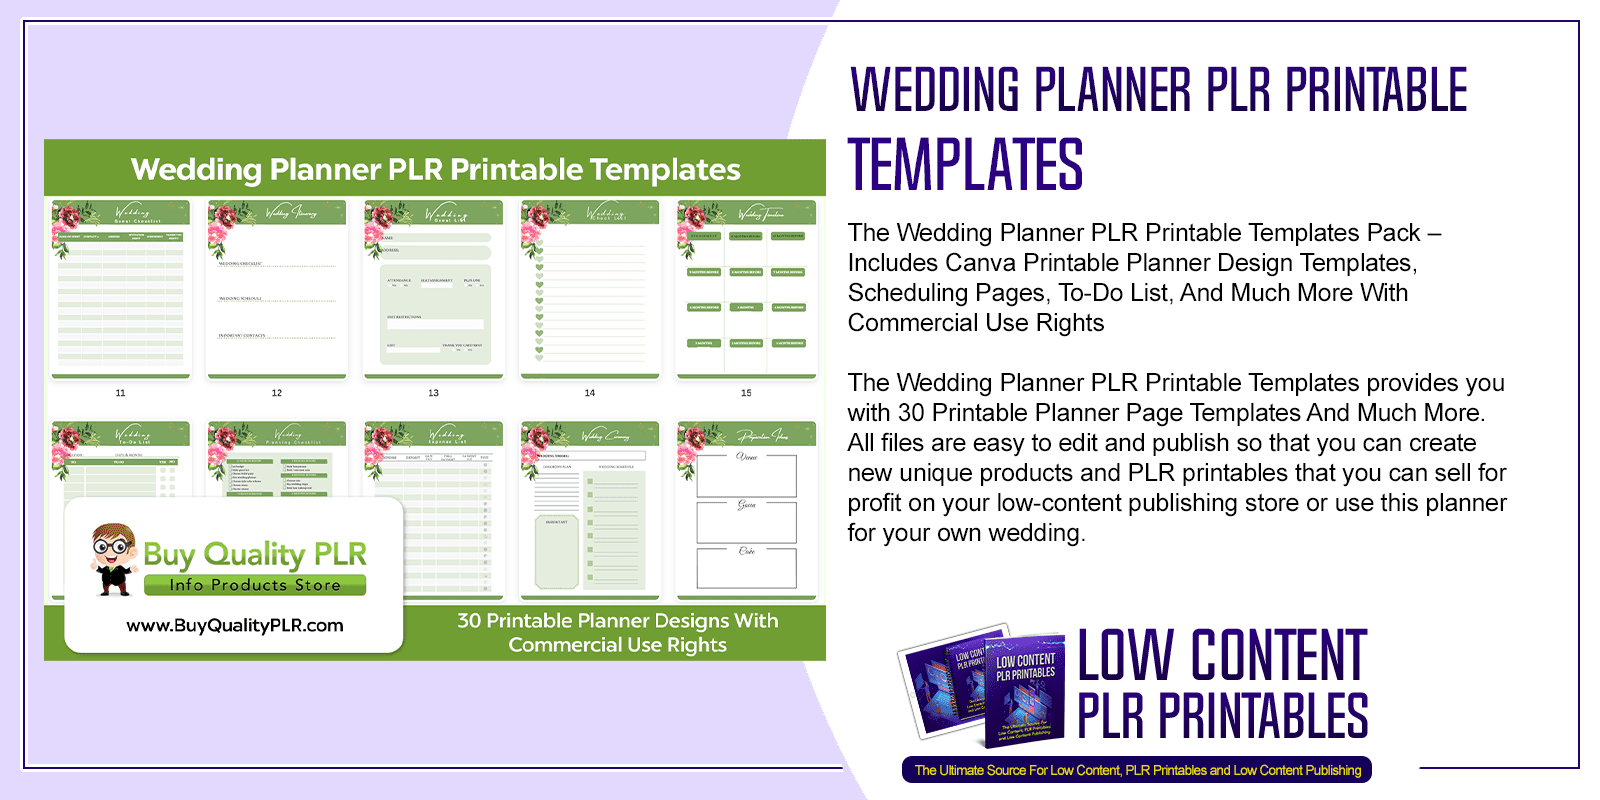 Wedding Planner PLR Printable Templates